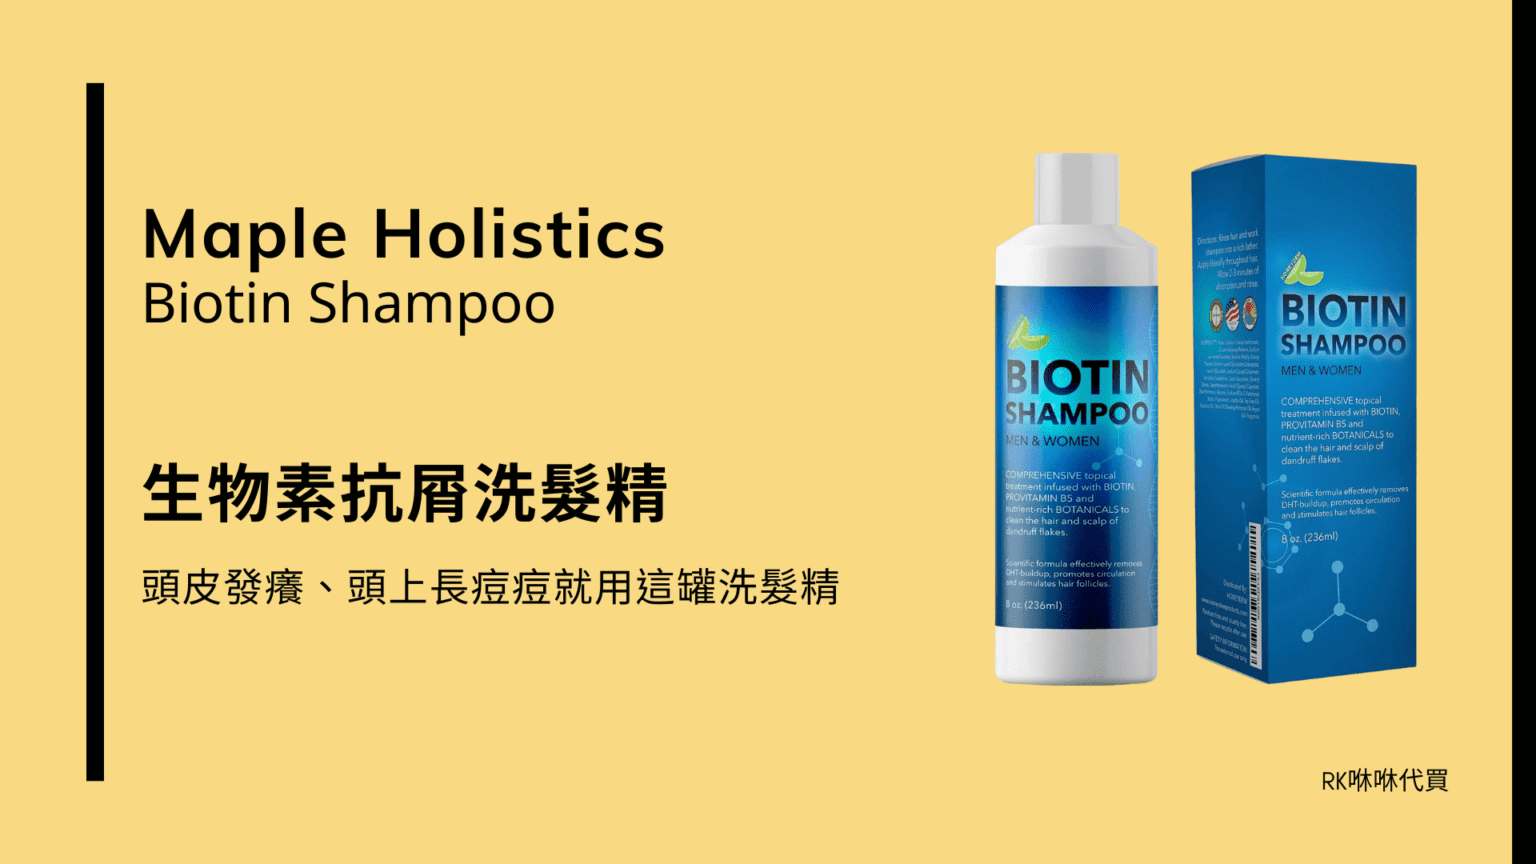 Maple Holistics Biotin Shampoo 生物素抗屑洗髮精